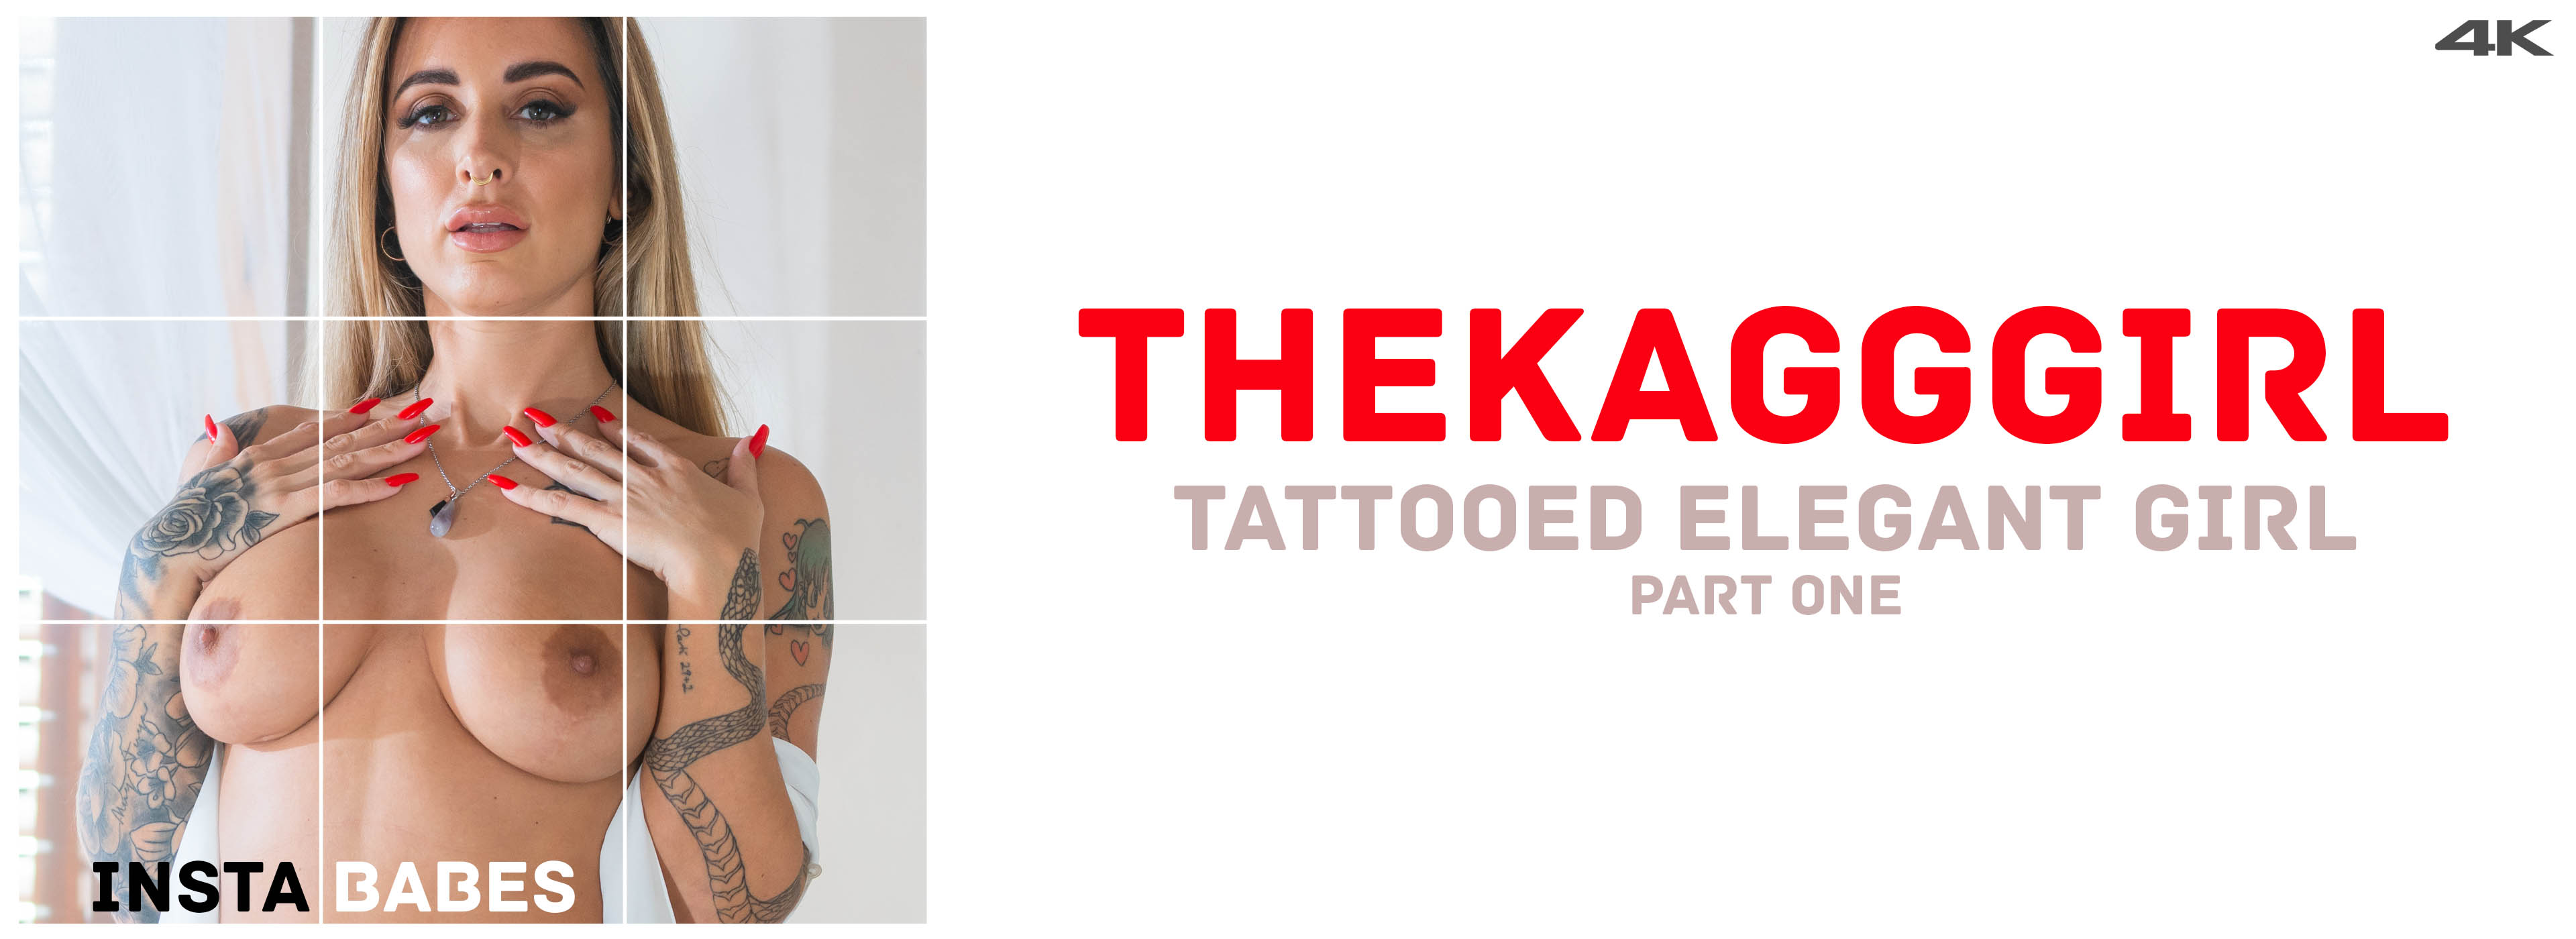 TheKaGGGirl | Tattooed Elegant Girl Part One